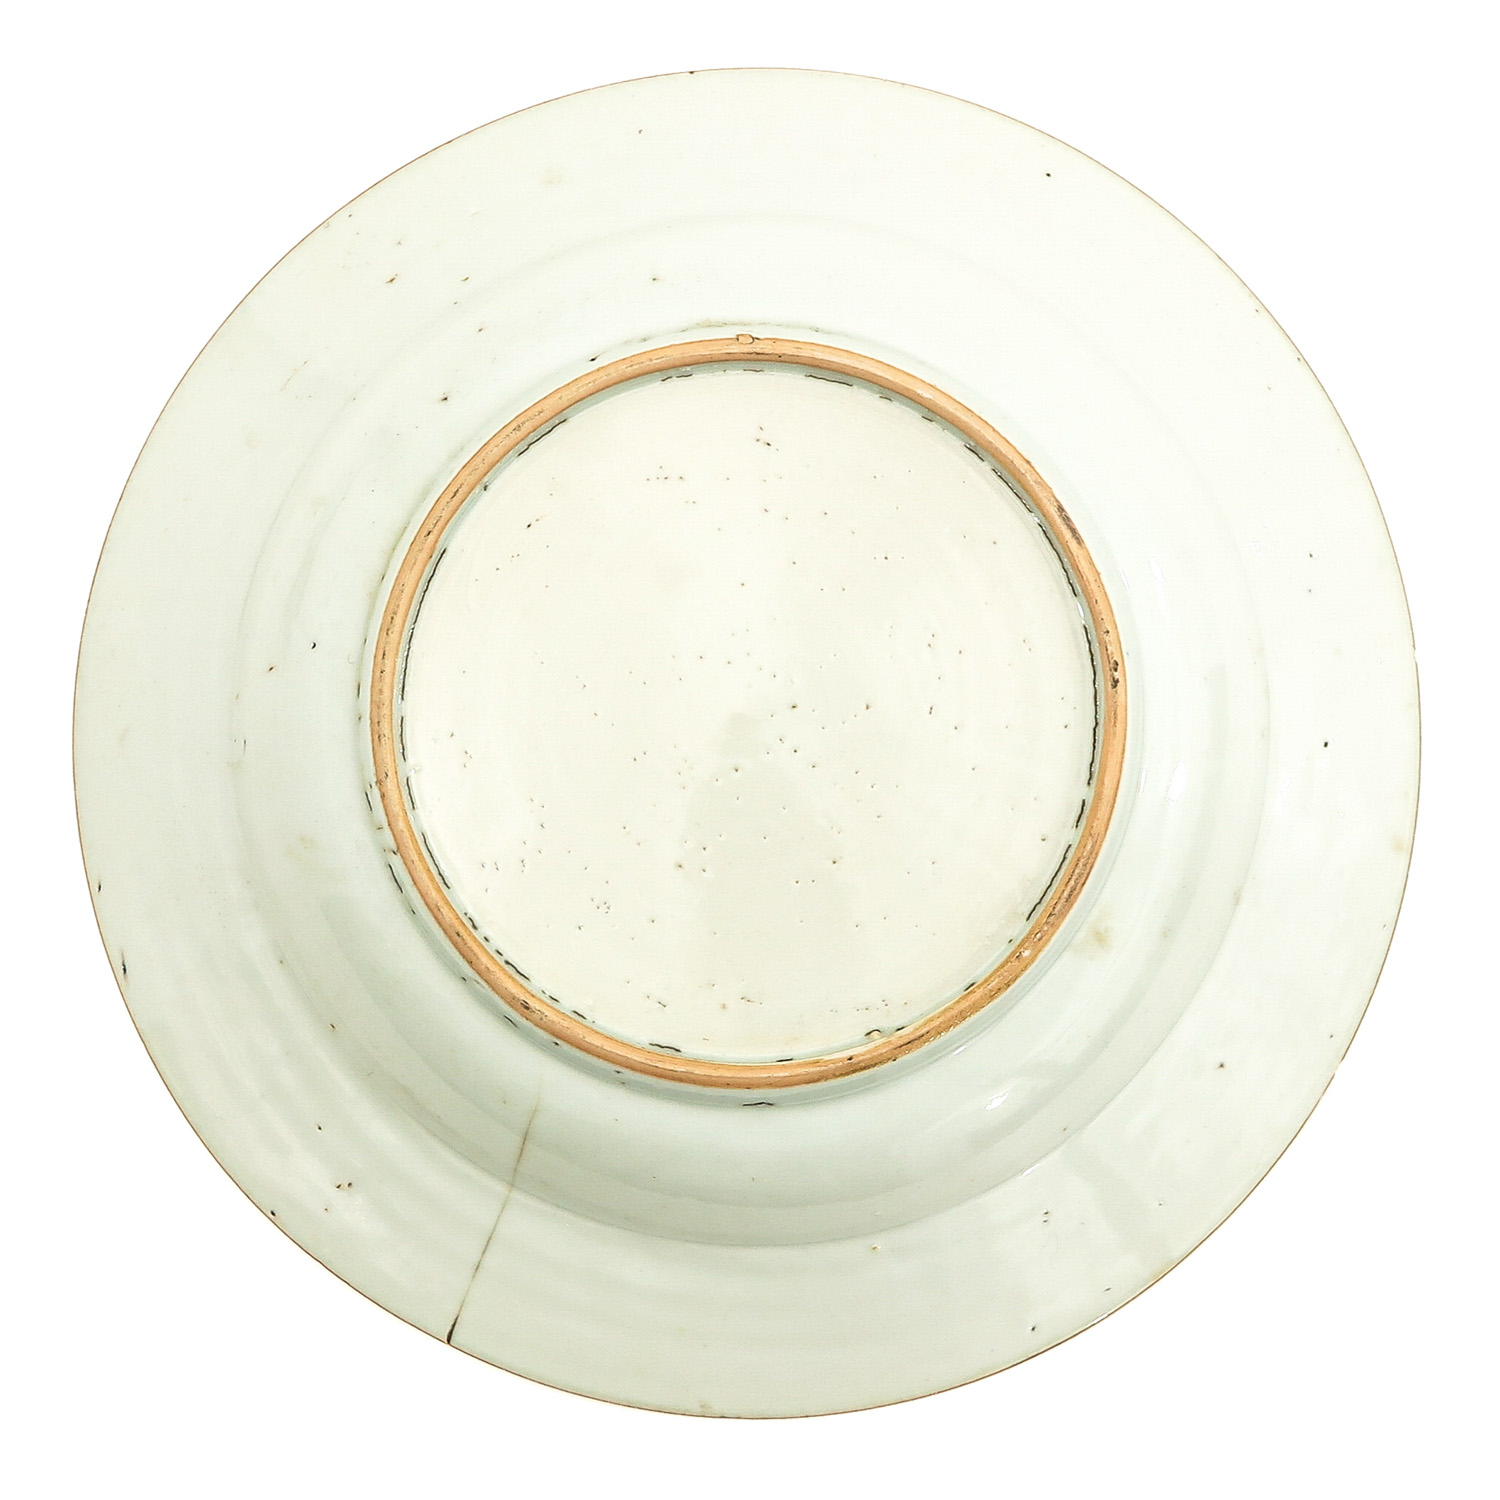 A Series of 3 Imari Plates - Image 8 of 10